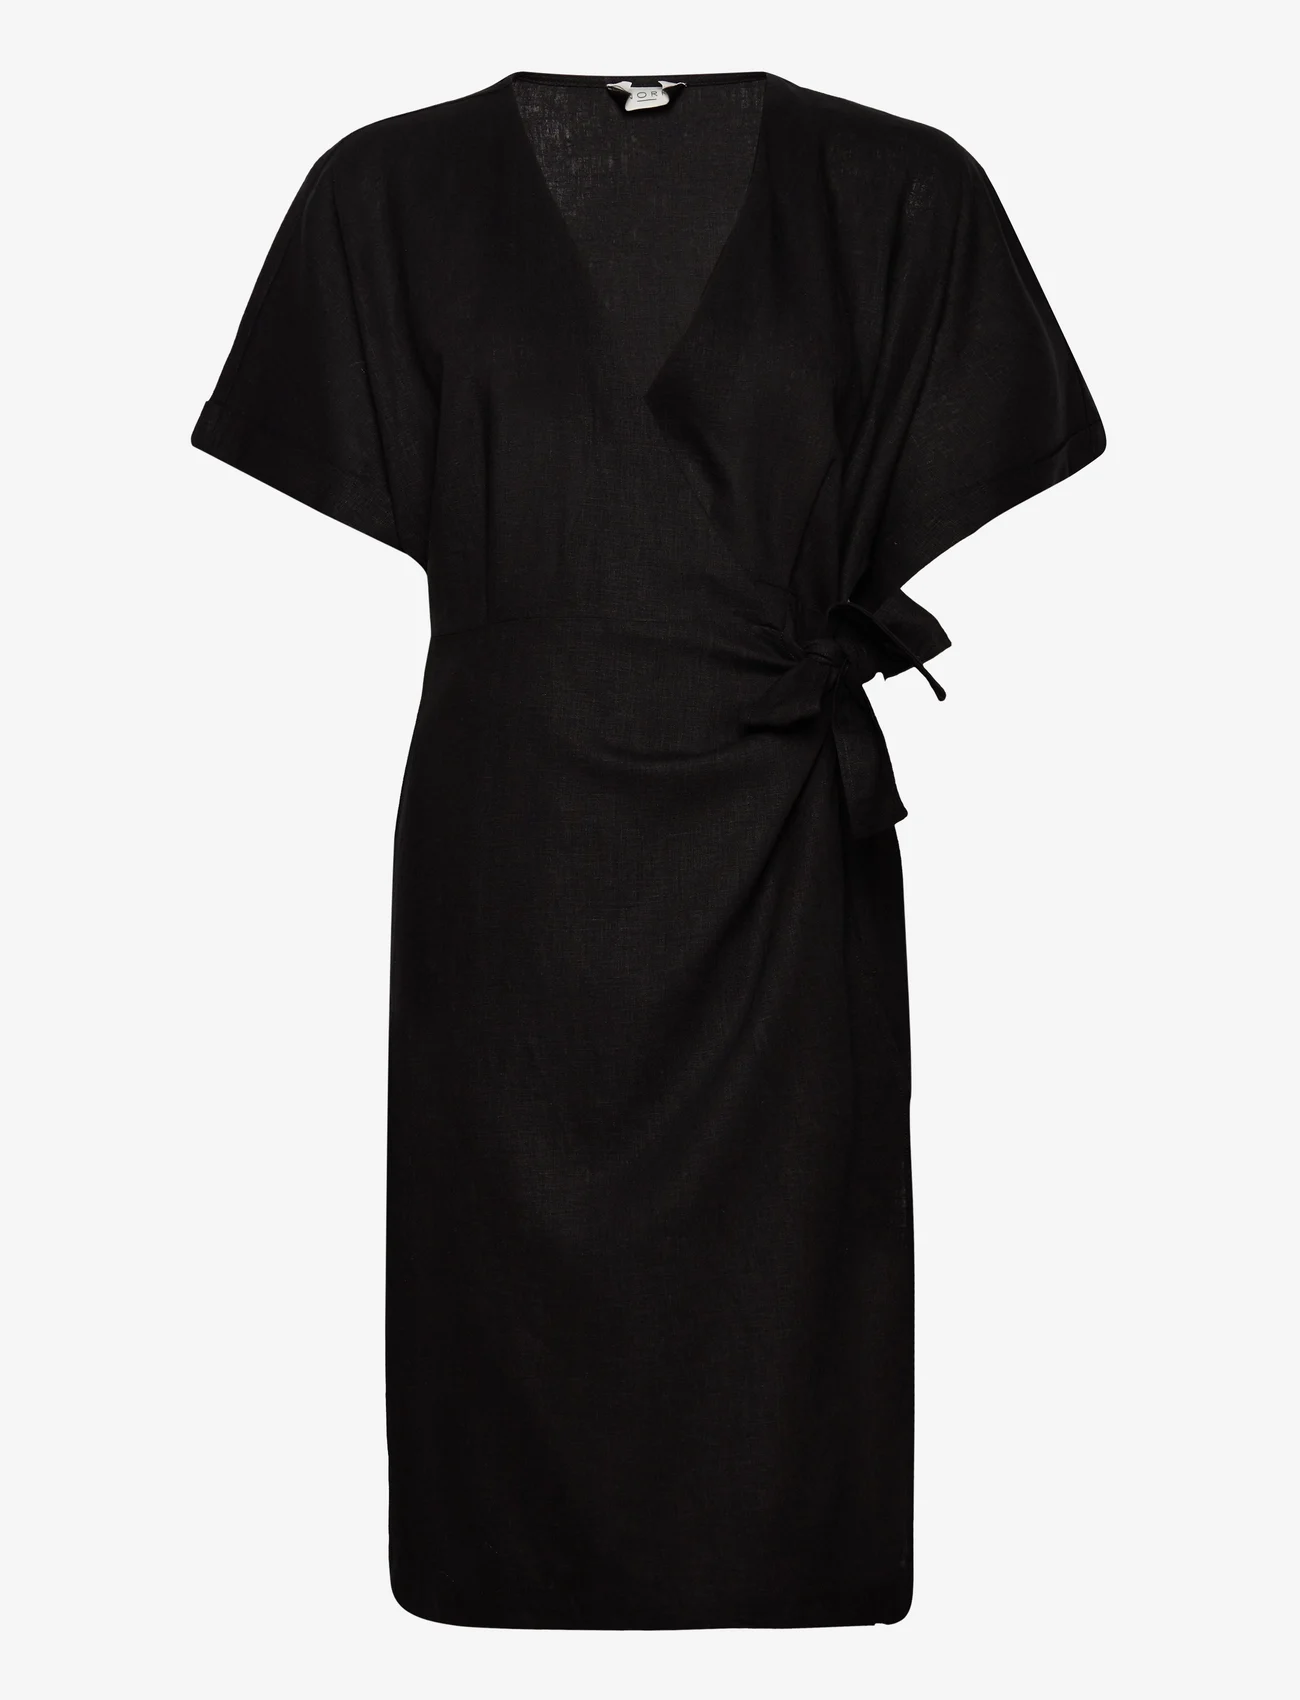 NORR - Esi wrap dress - omslagskjoler - black - 0